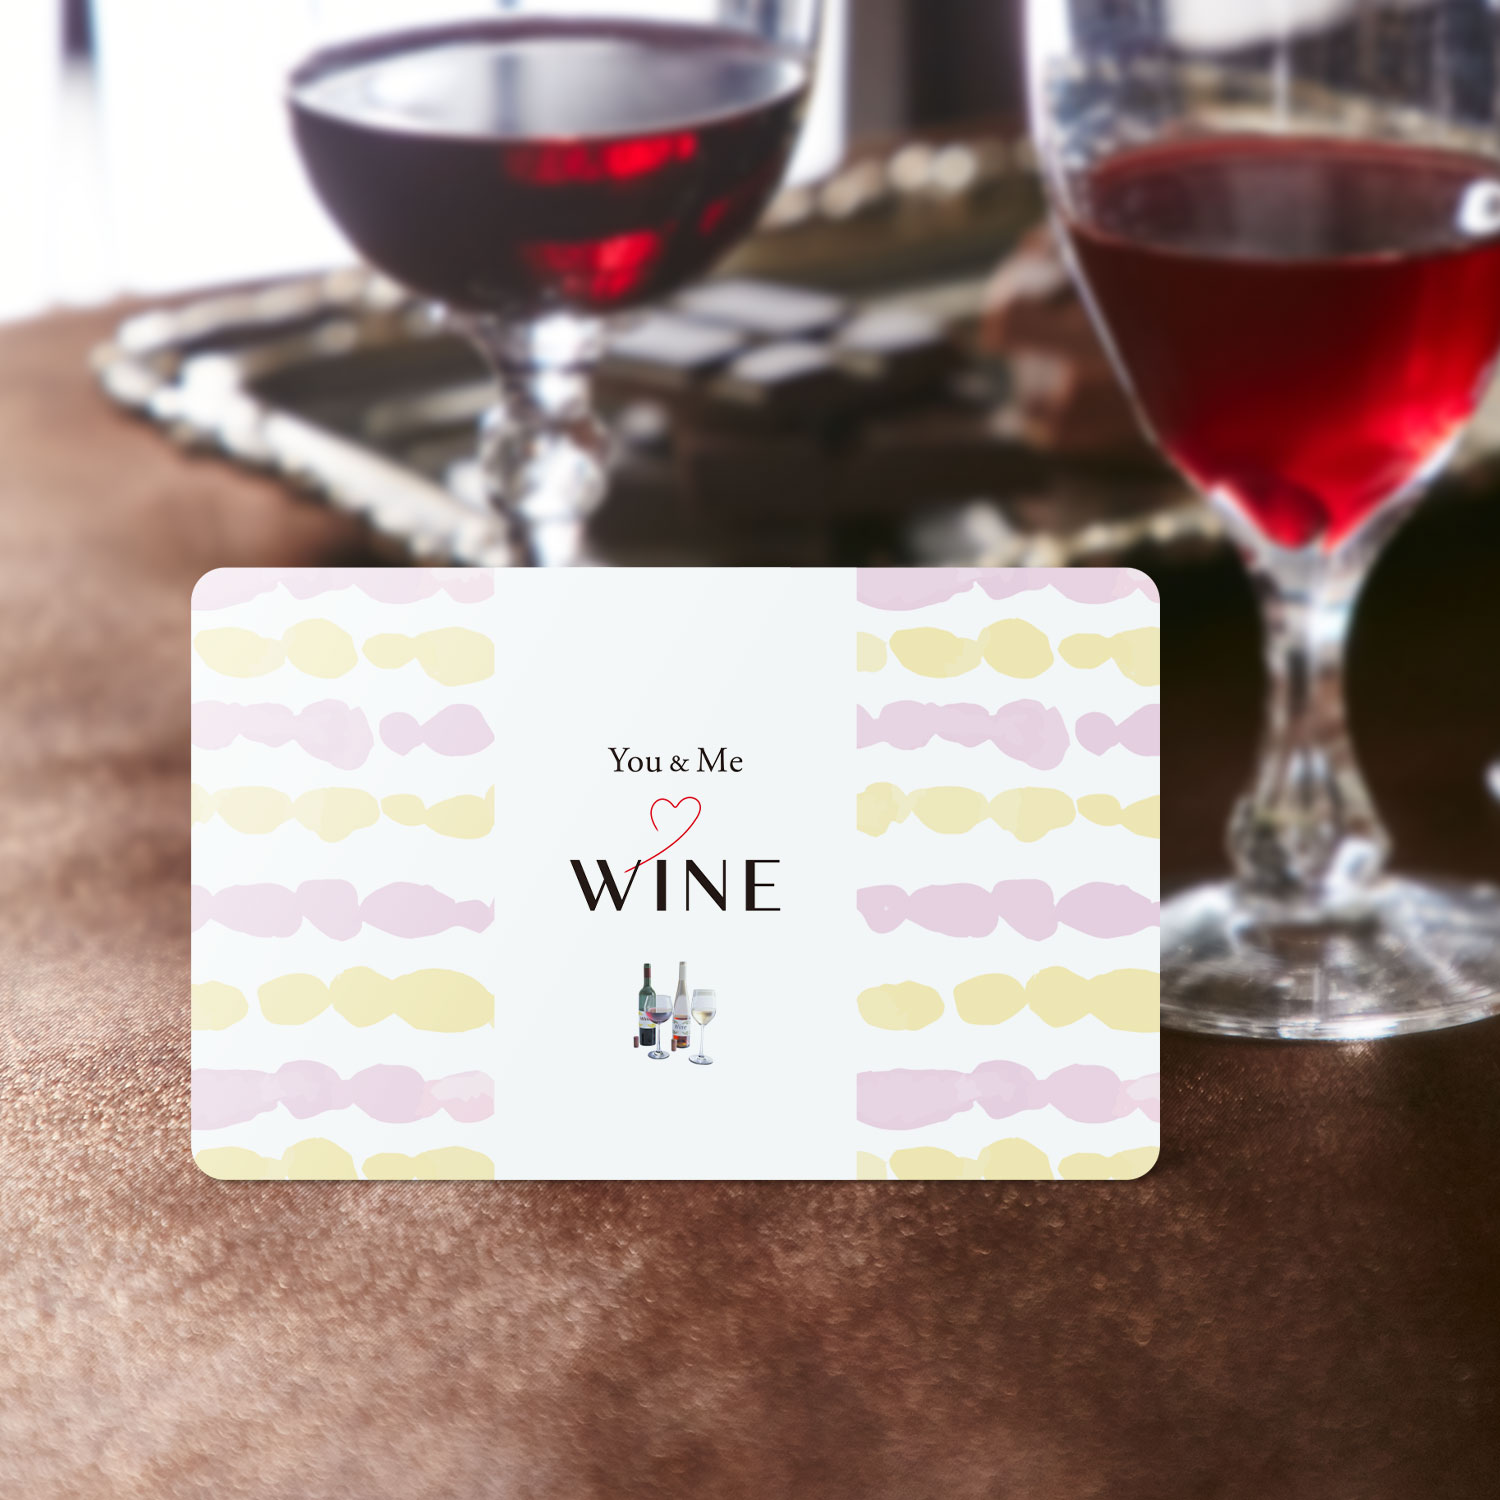 【You & Me】【カードギフト】ワインにハマる夜 ワインギフトカード「You & Me WINE」HO